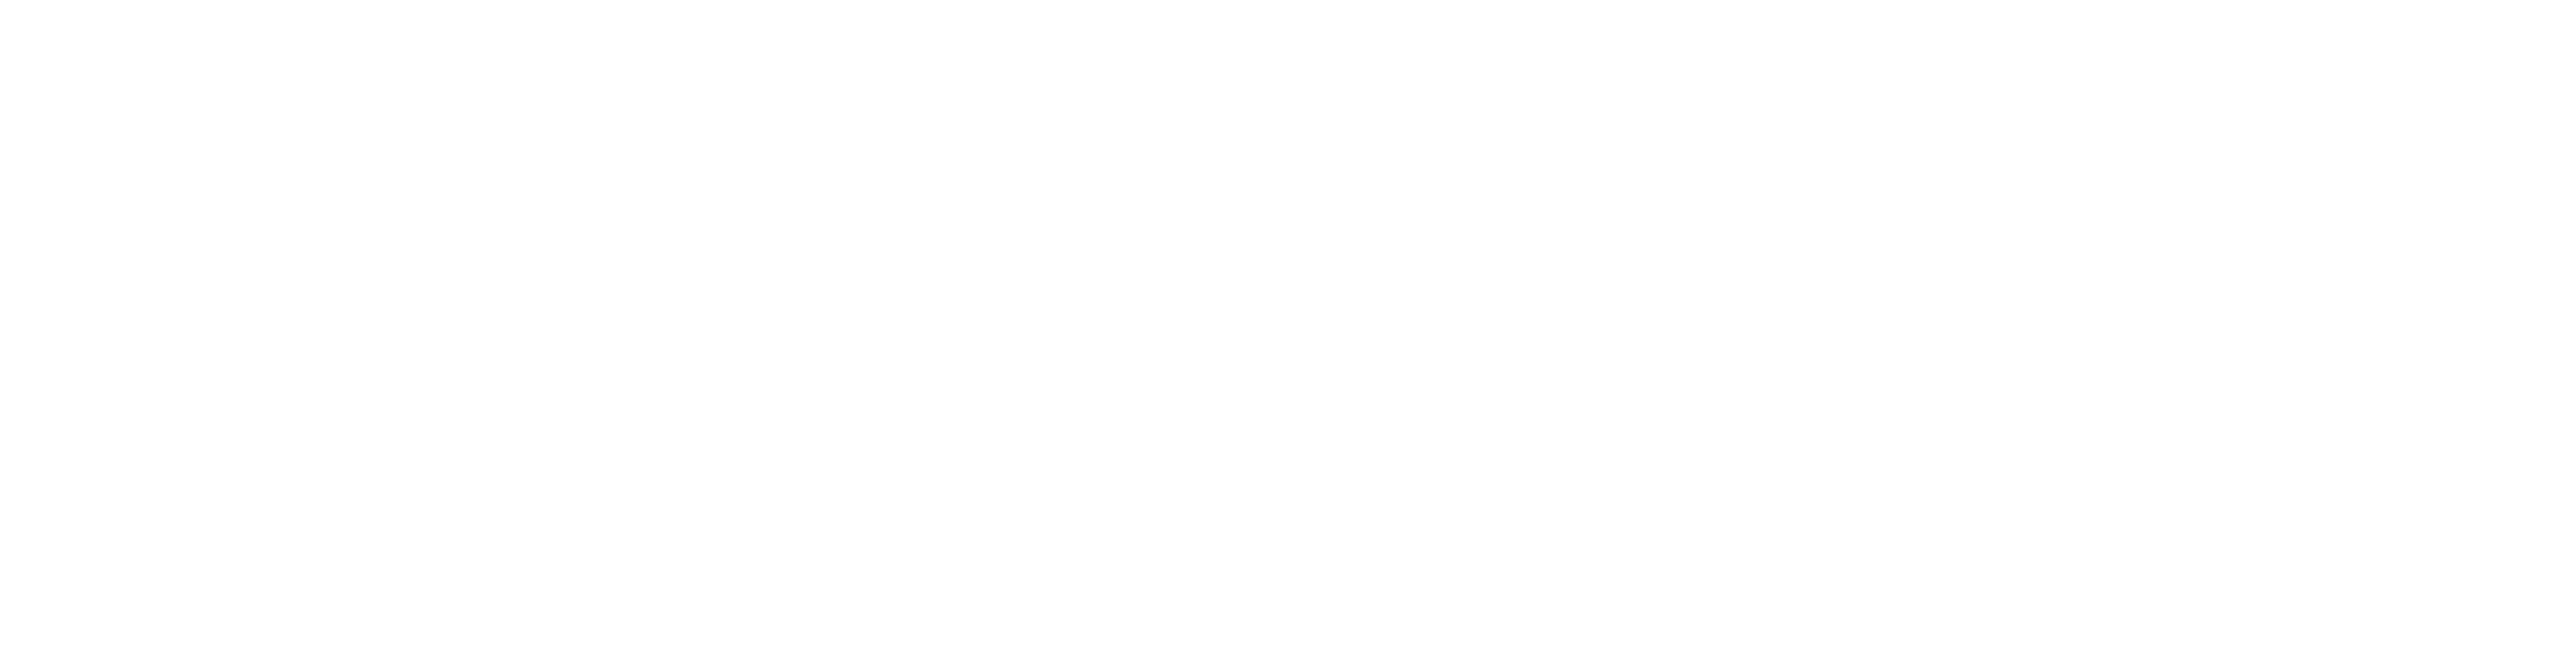 STEFANO FRANCESCHINI Logo white